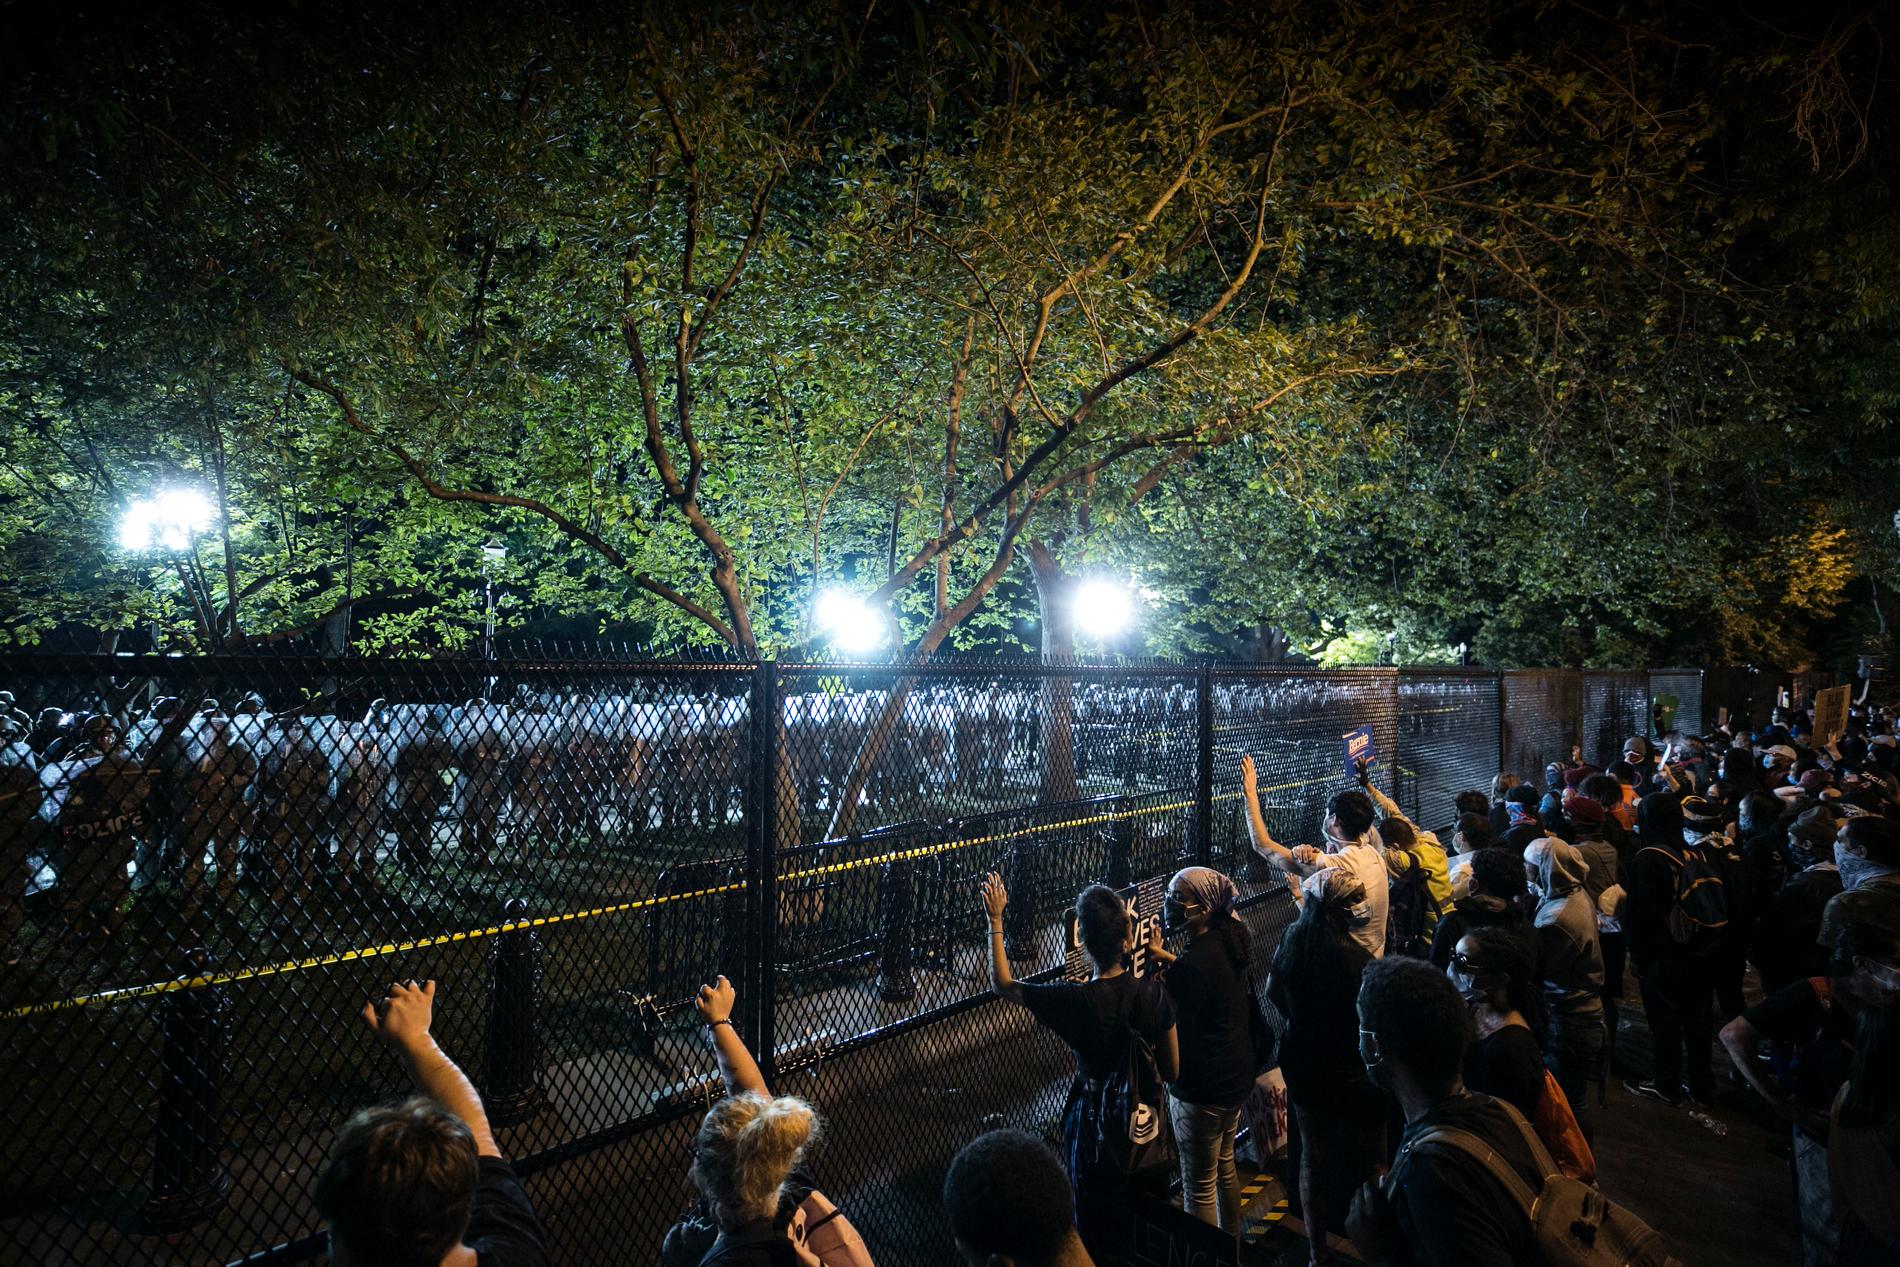 Stora protester utanför Vita huset. Skrikande demonstranter skakar staketet.